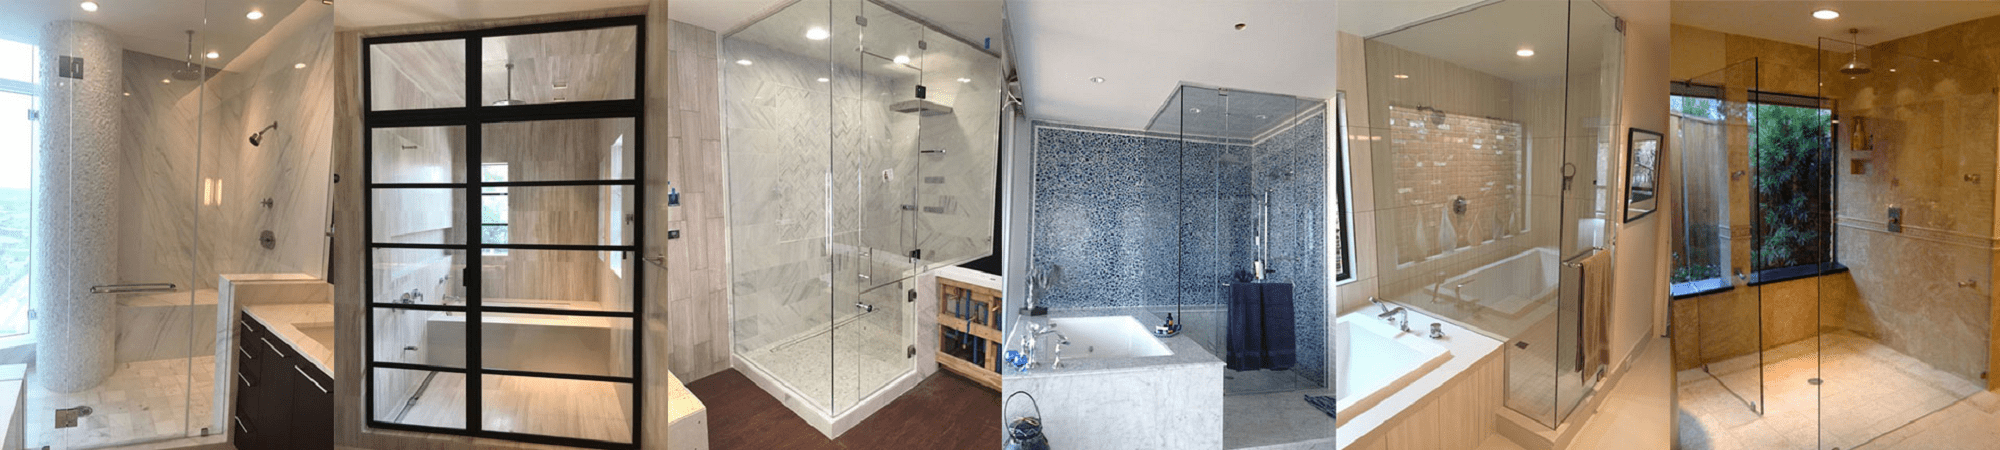 semi frameless glass Shower enclosures